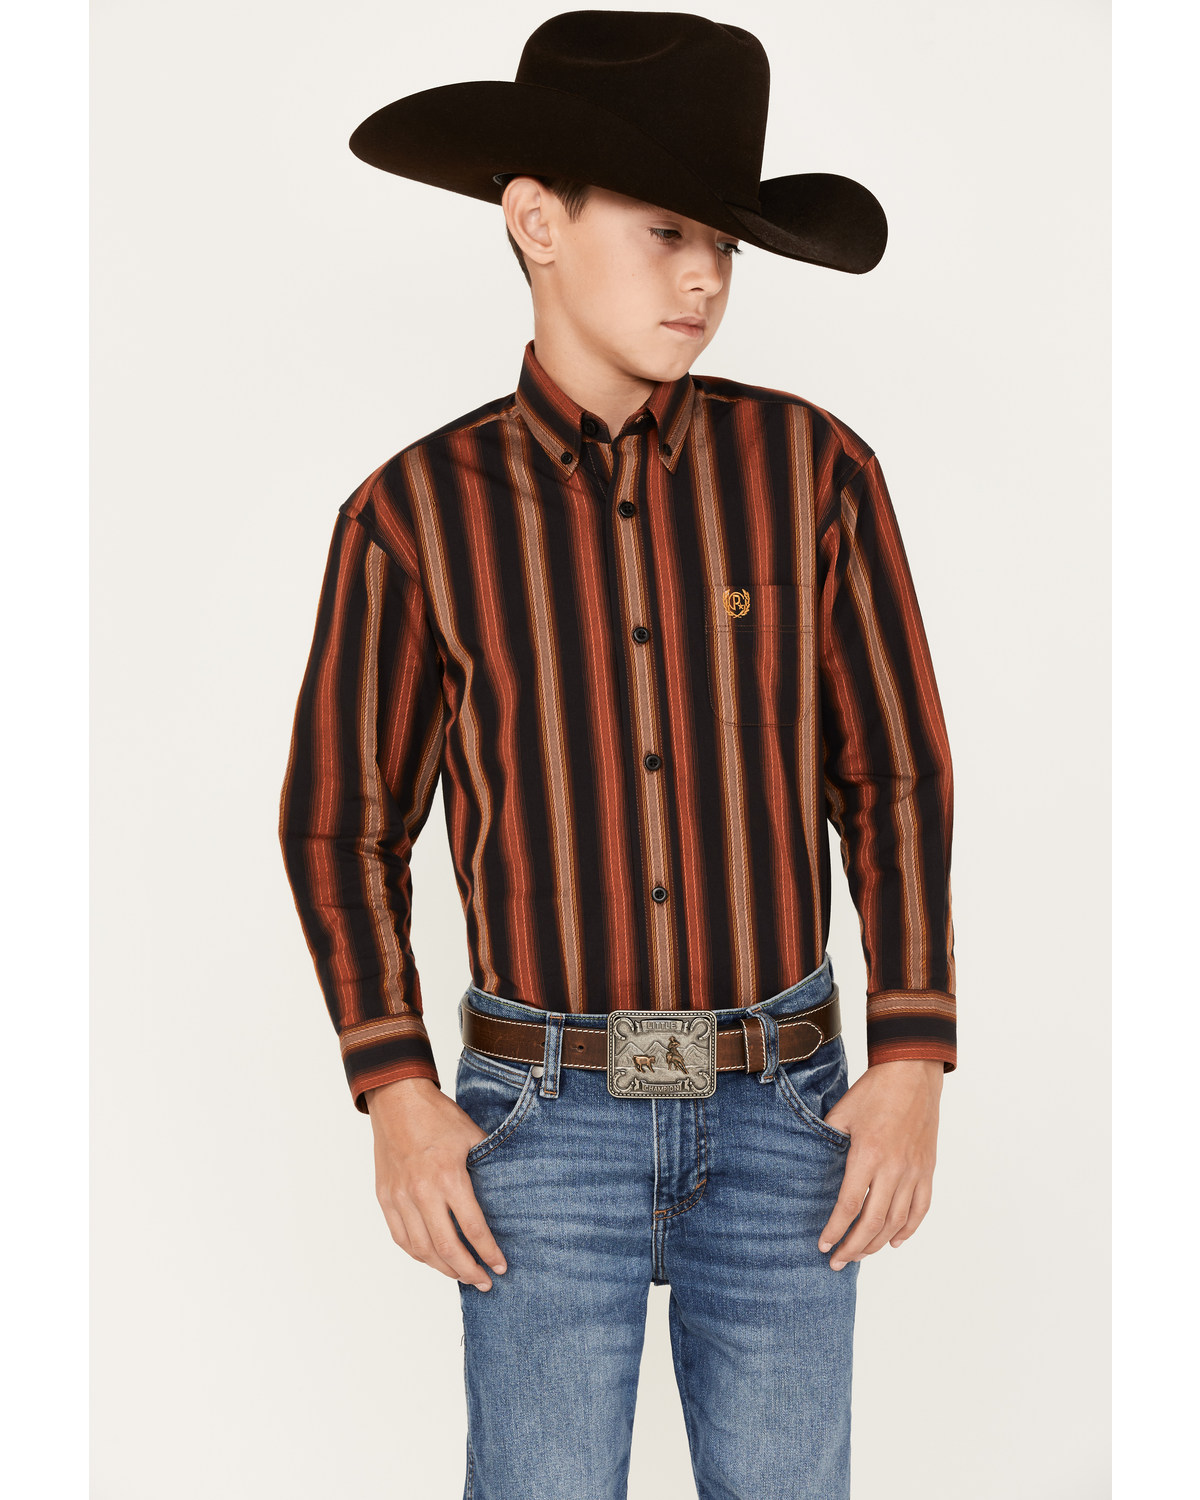 Panhandle Boys' Stripe Print Long Sleeve Button-Down Shirt